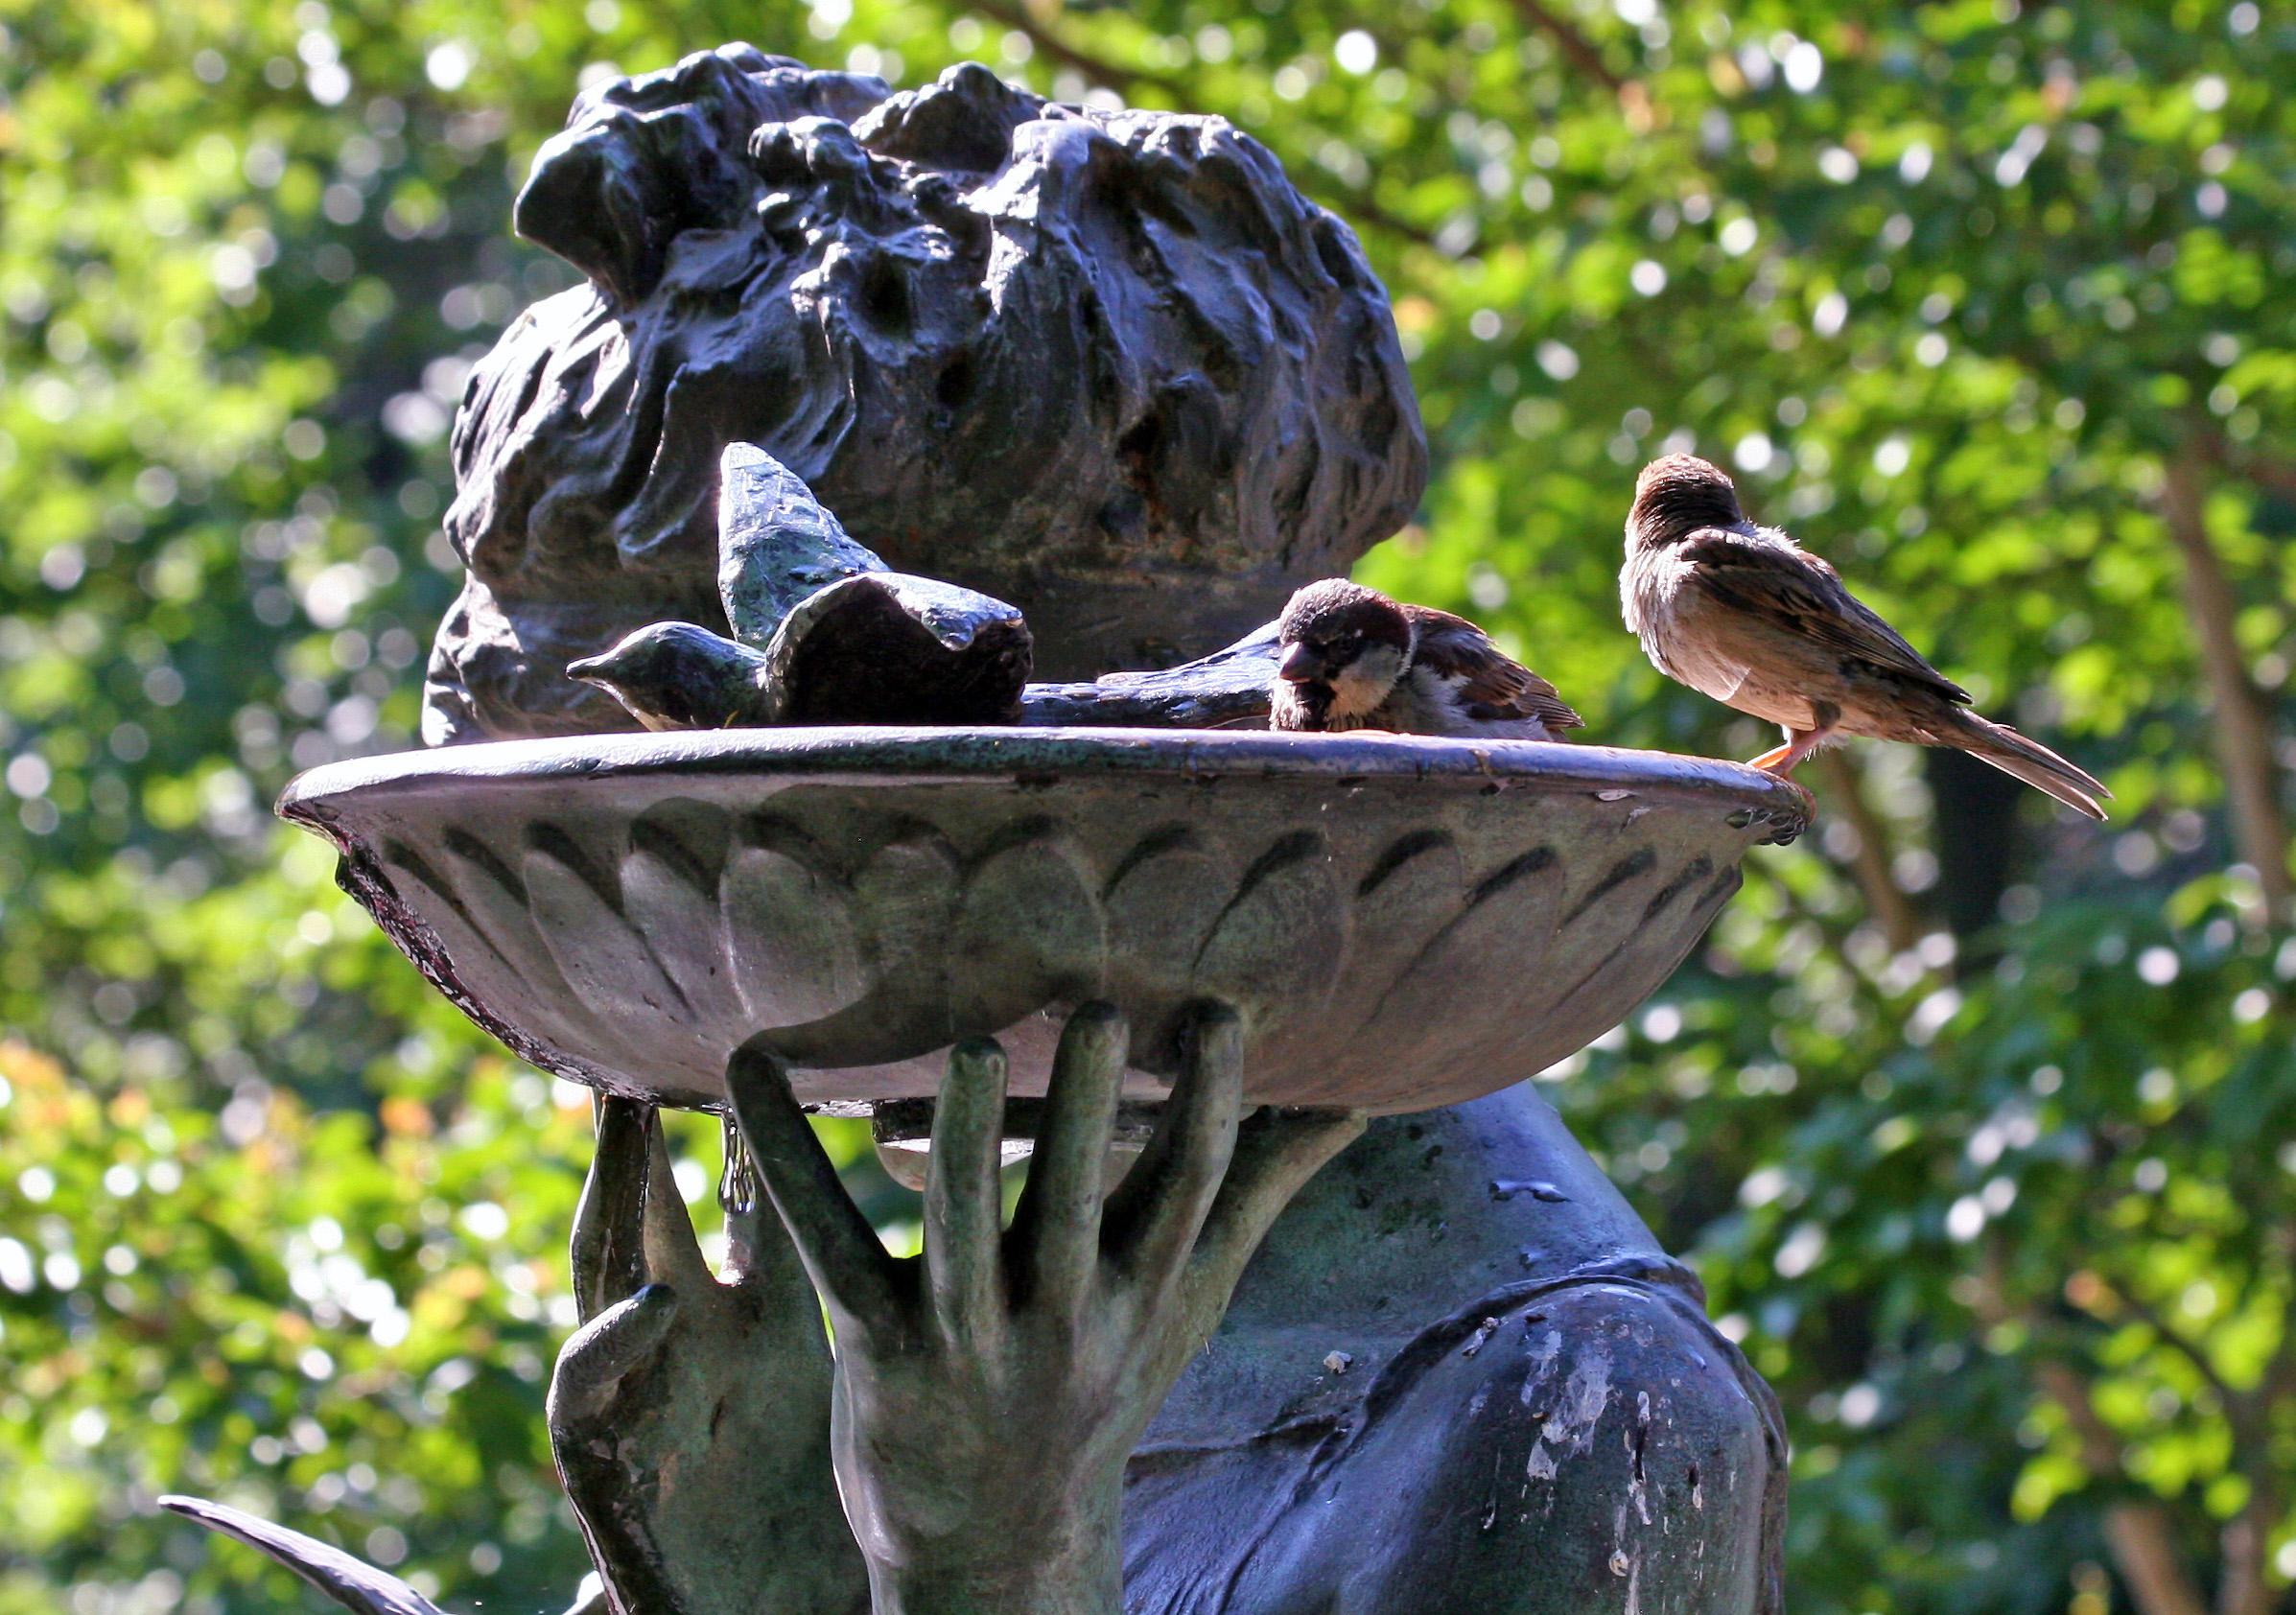 'Secret Garden' Memorial Statue & Bird Bath photo - Hubert Steed photos ...